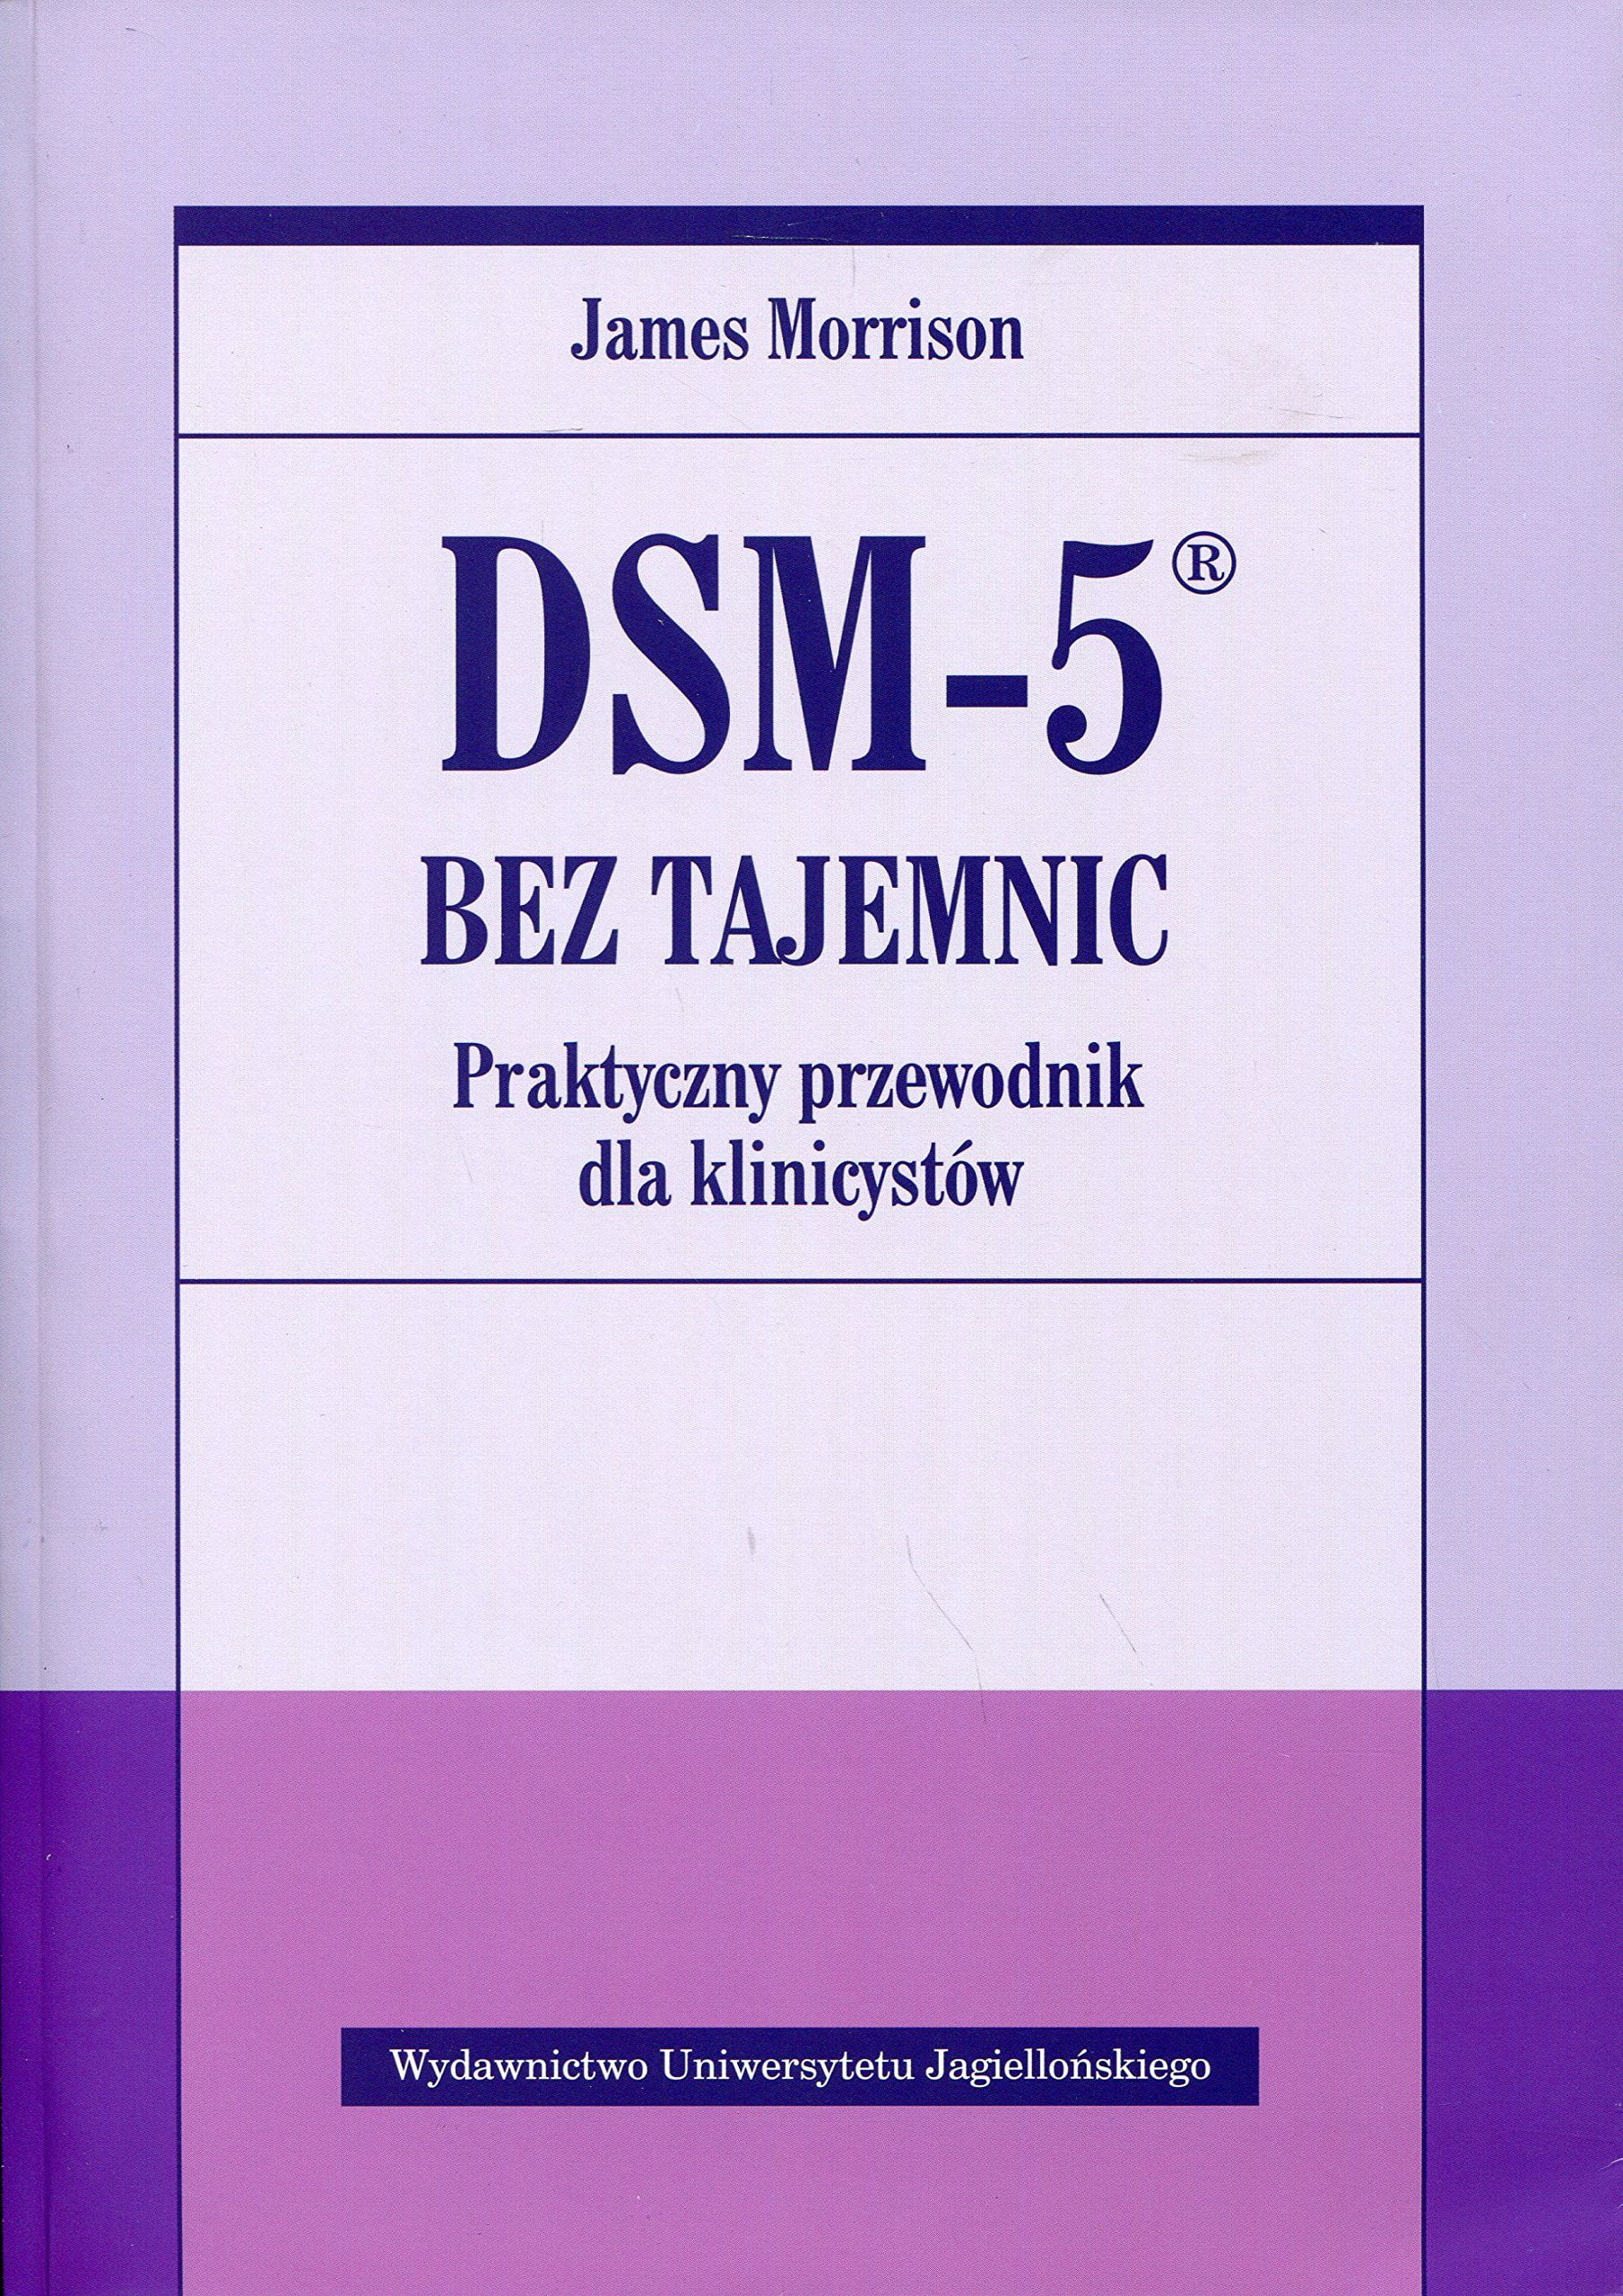 Classification DSM-5 